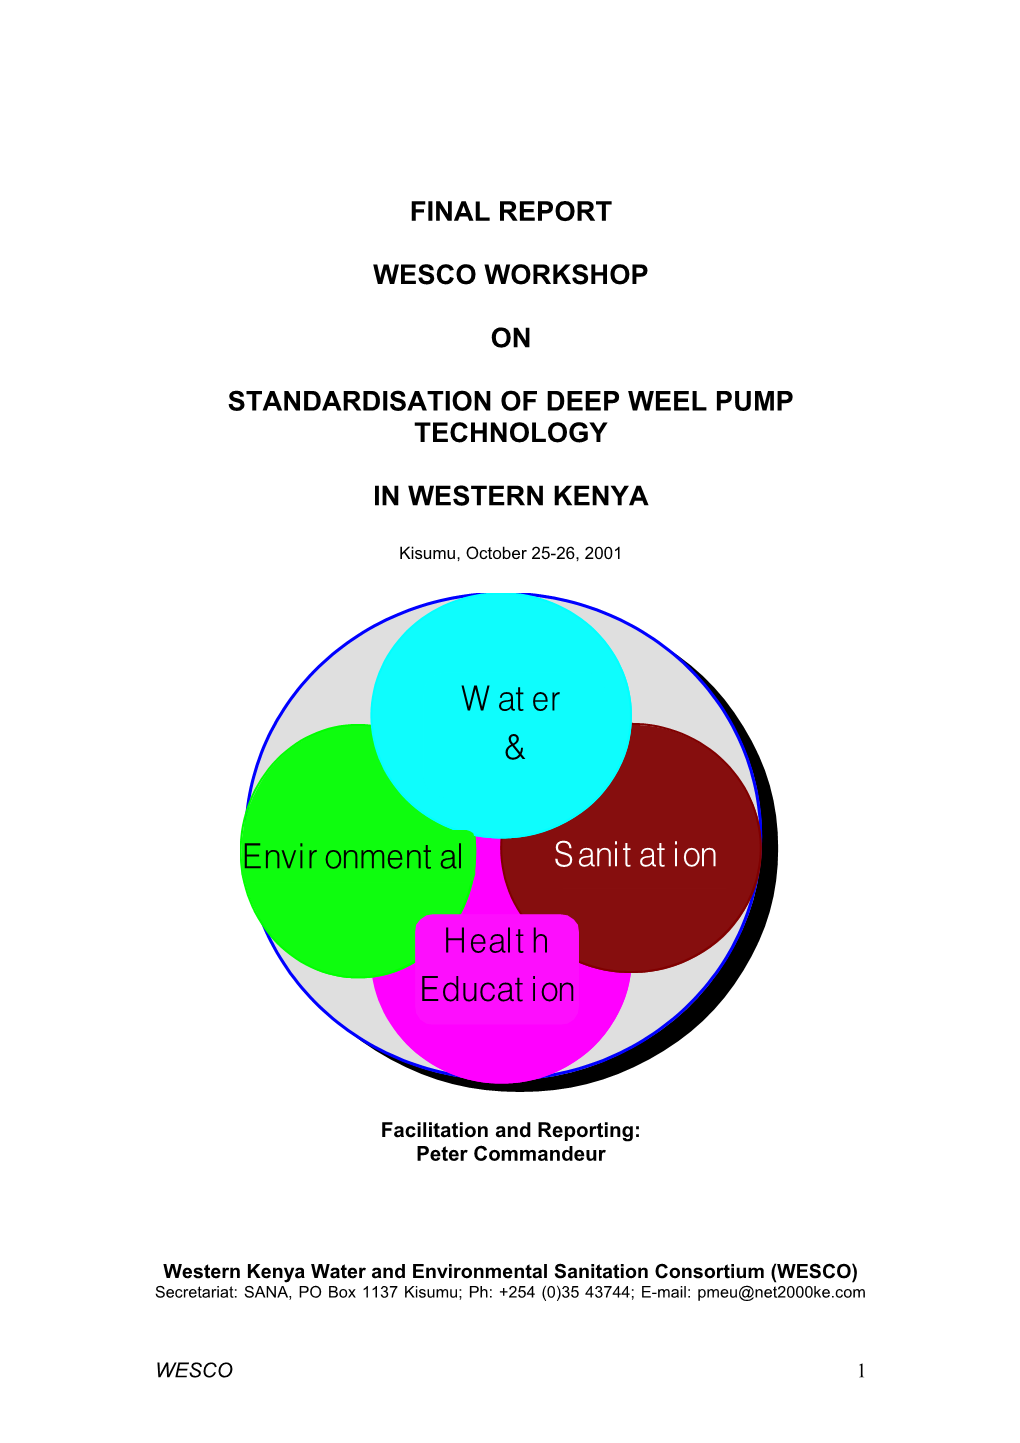 Standardisation of Deep Weel Pump Technology